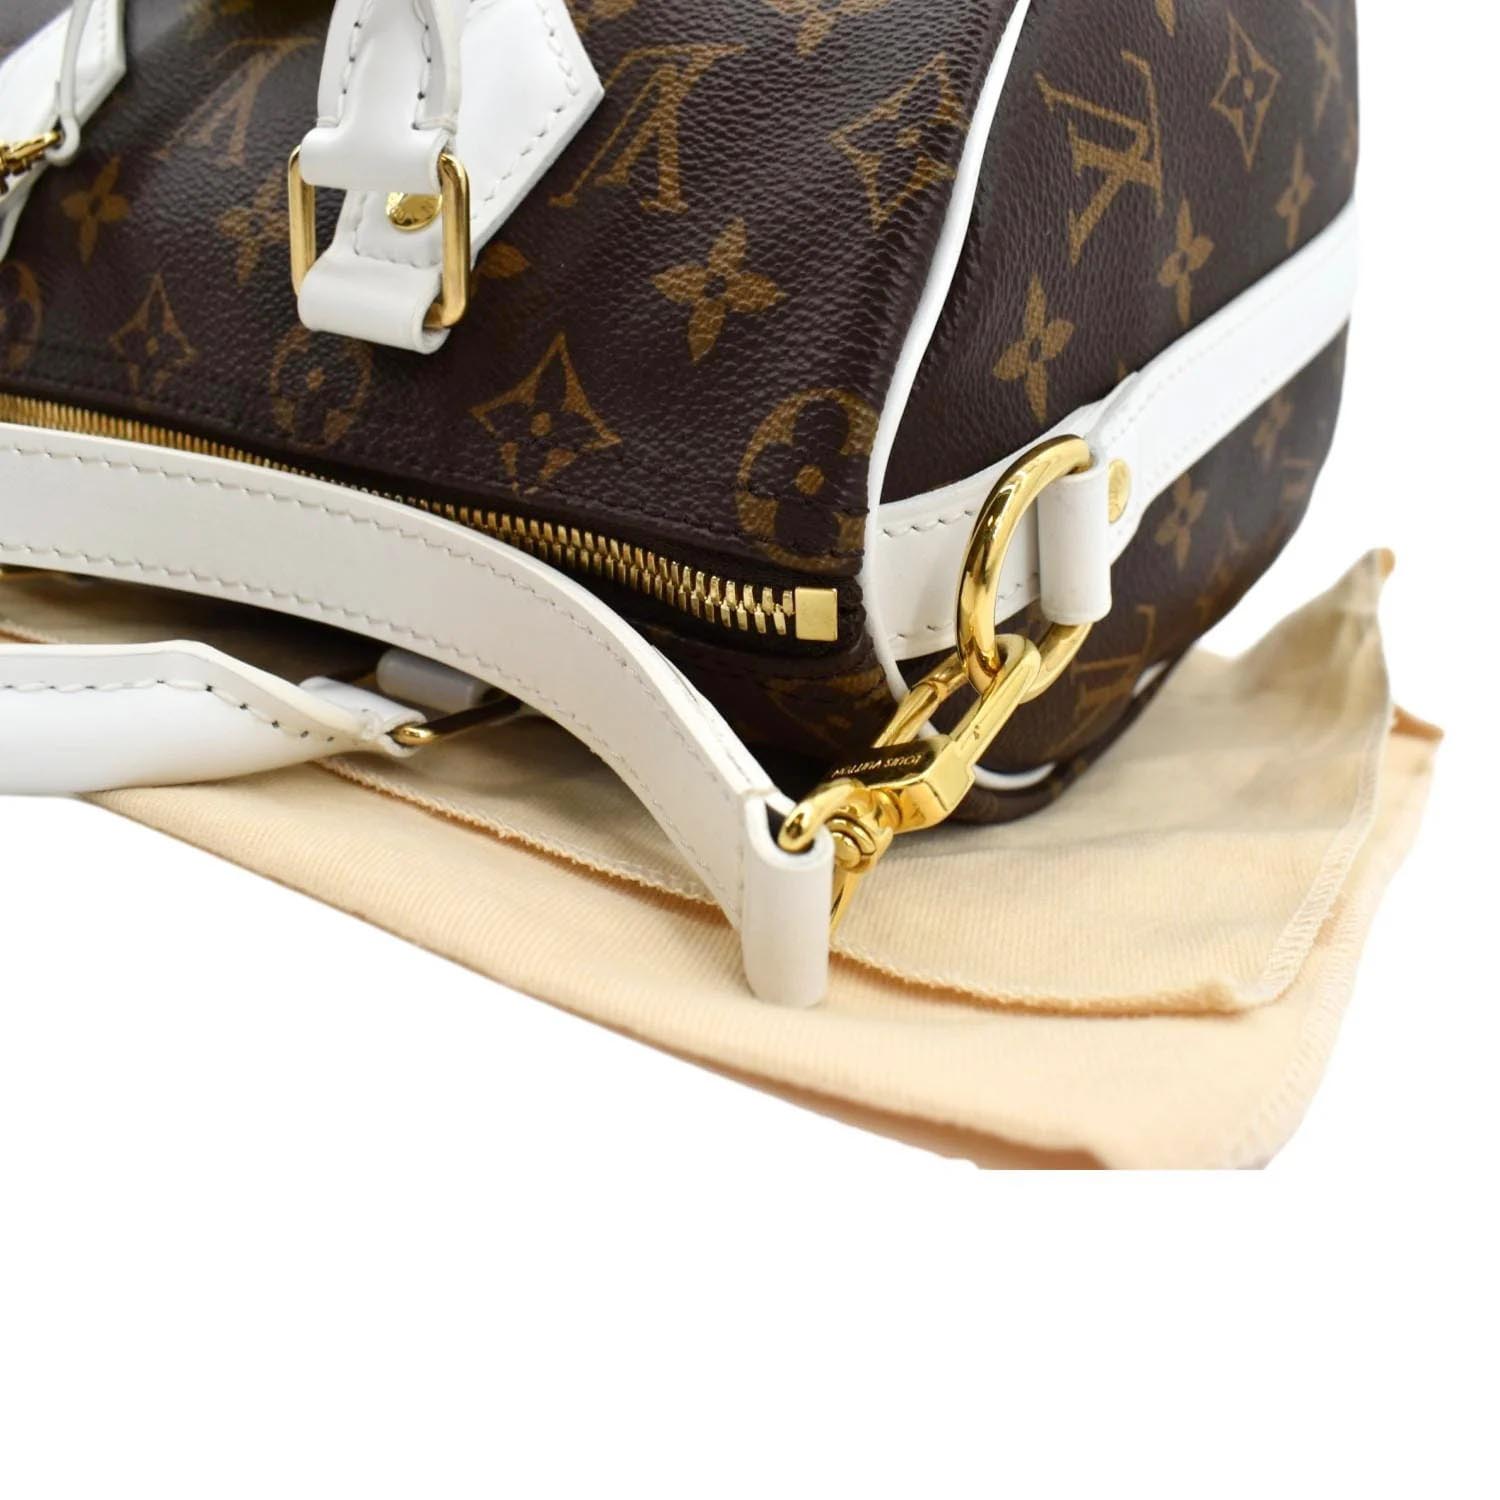 Authentic Louis Vuitton Speedy 25 in Monogram, Luxury, Bags